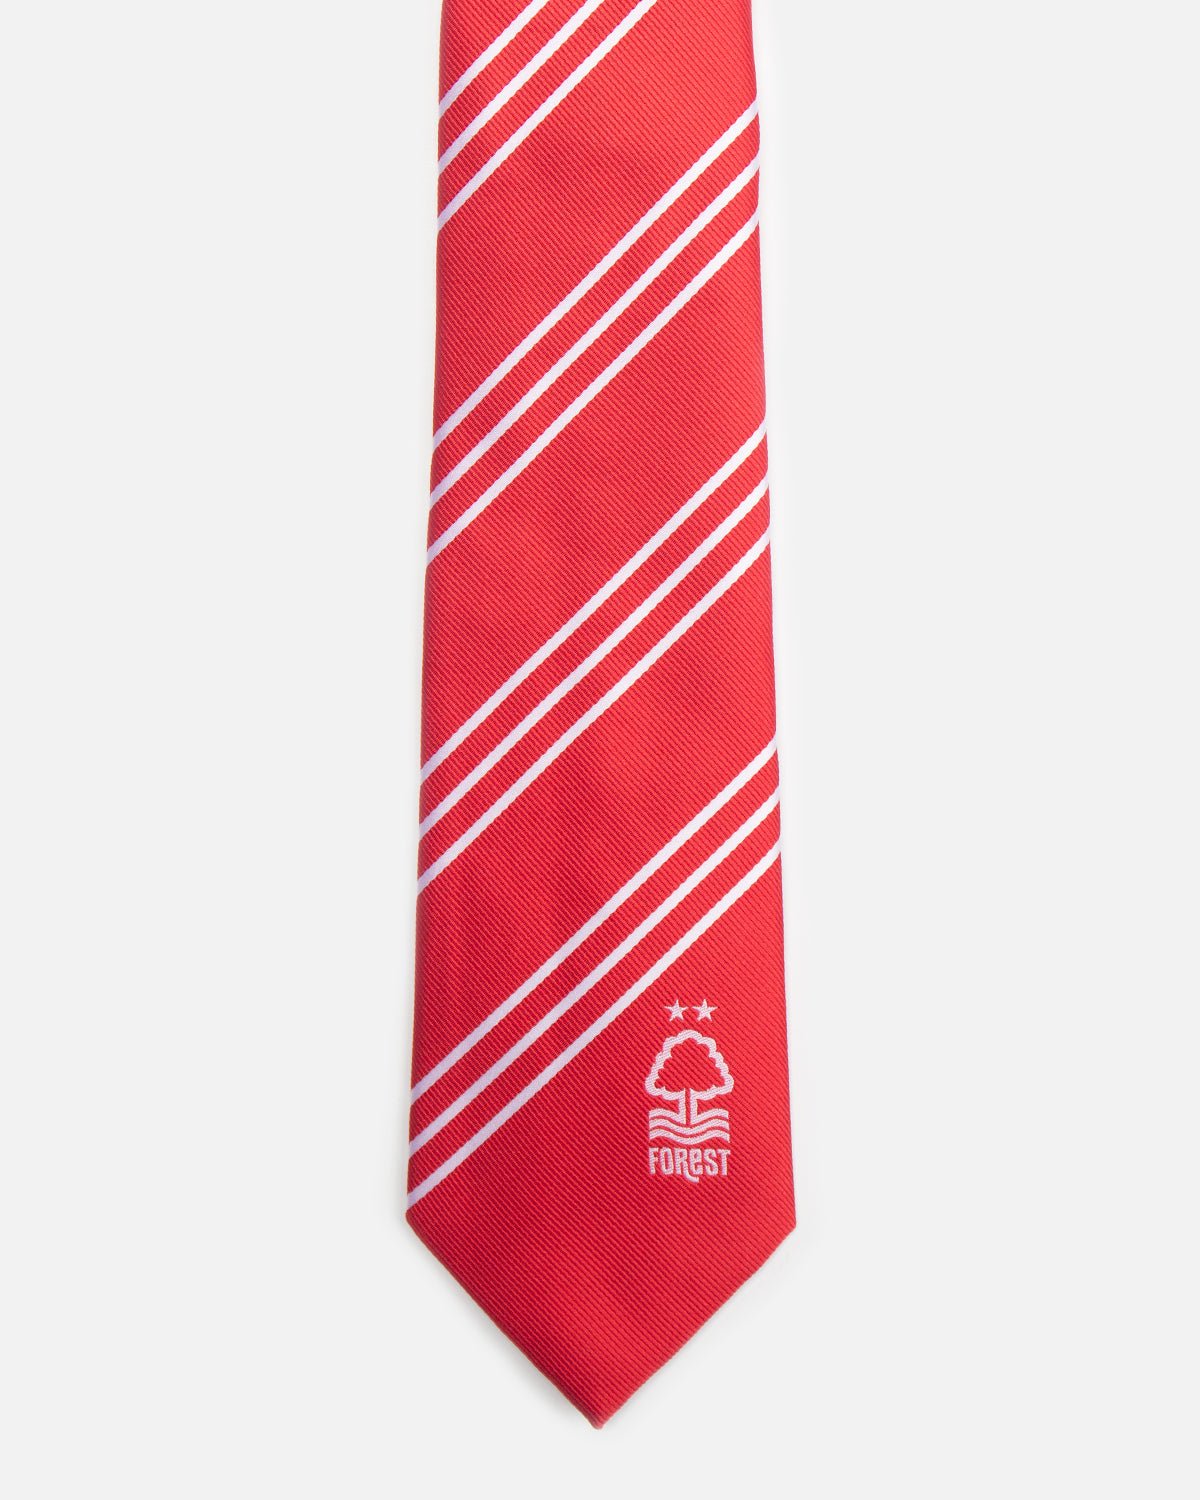 NFFC Red Multi Stripe Tie - Nottingham Forest FC